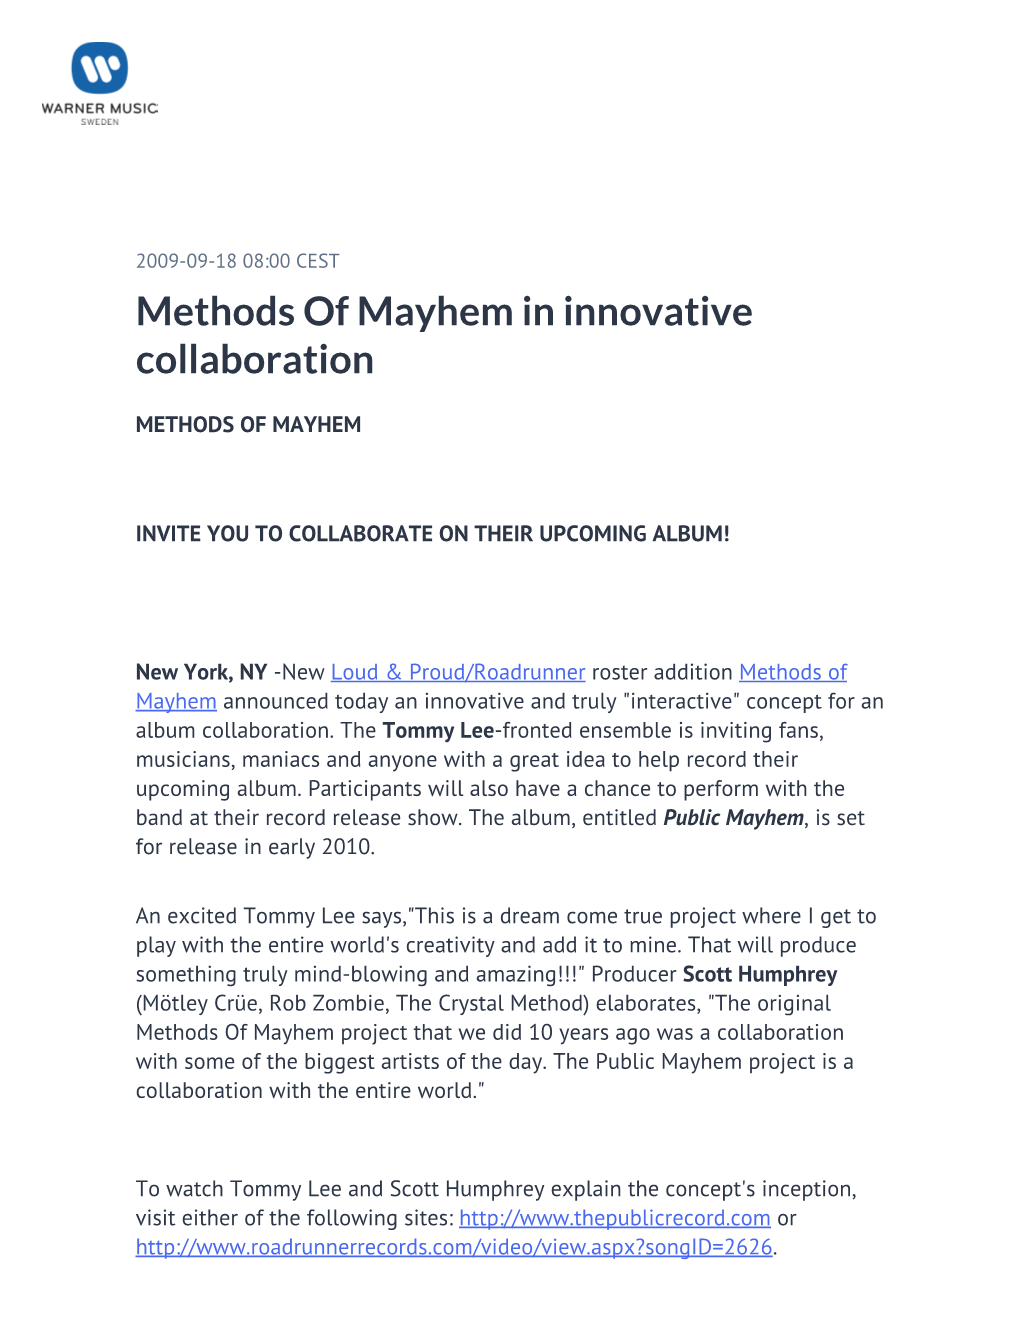 Methods of Mayhem in Innovative Collaboration